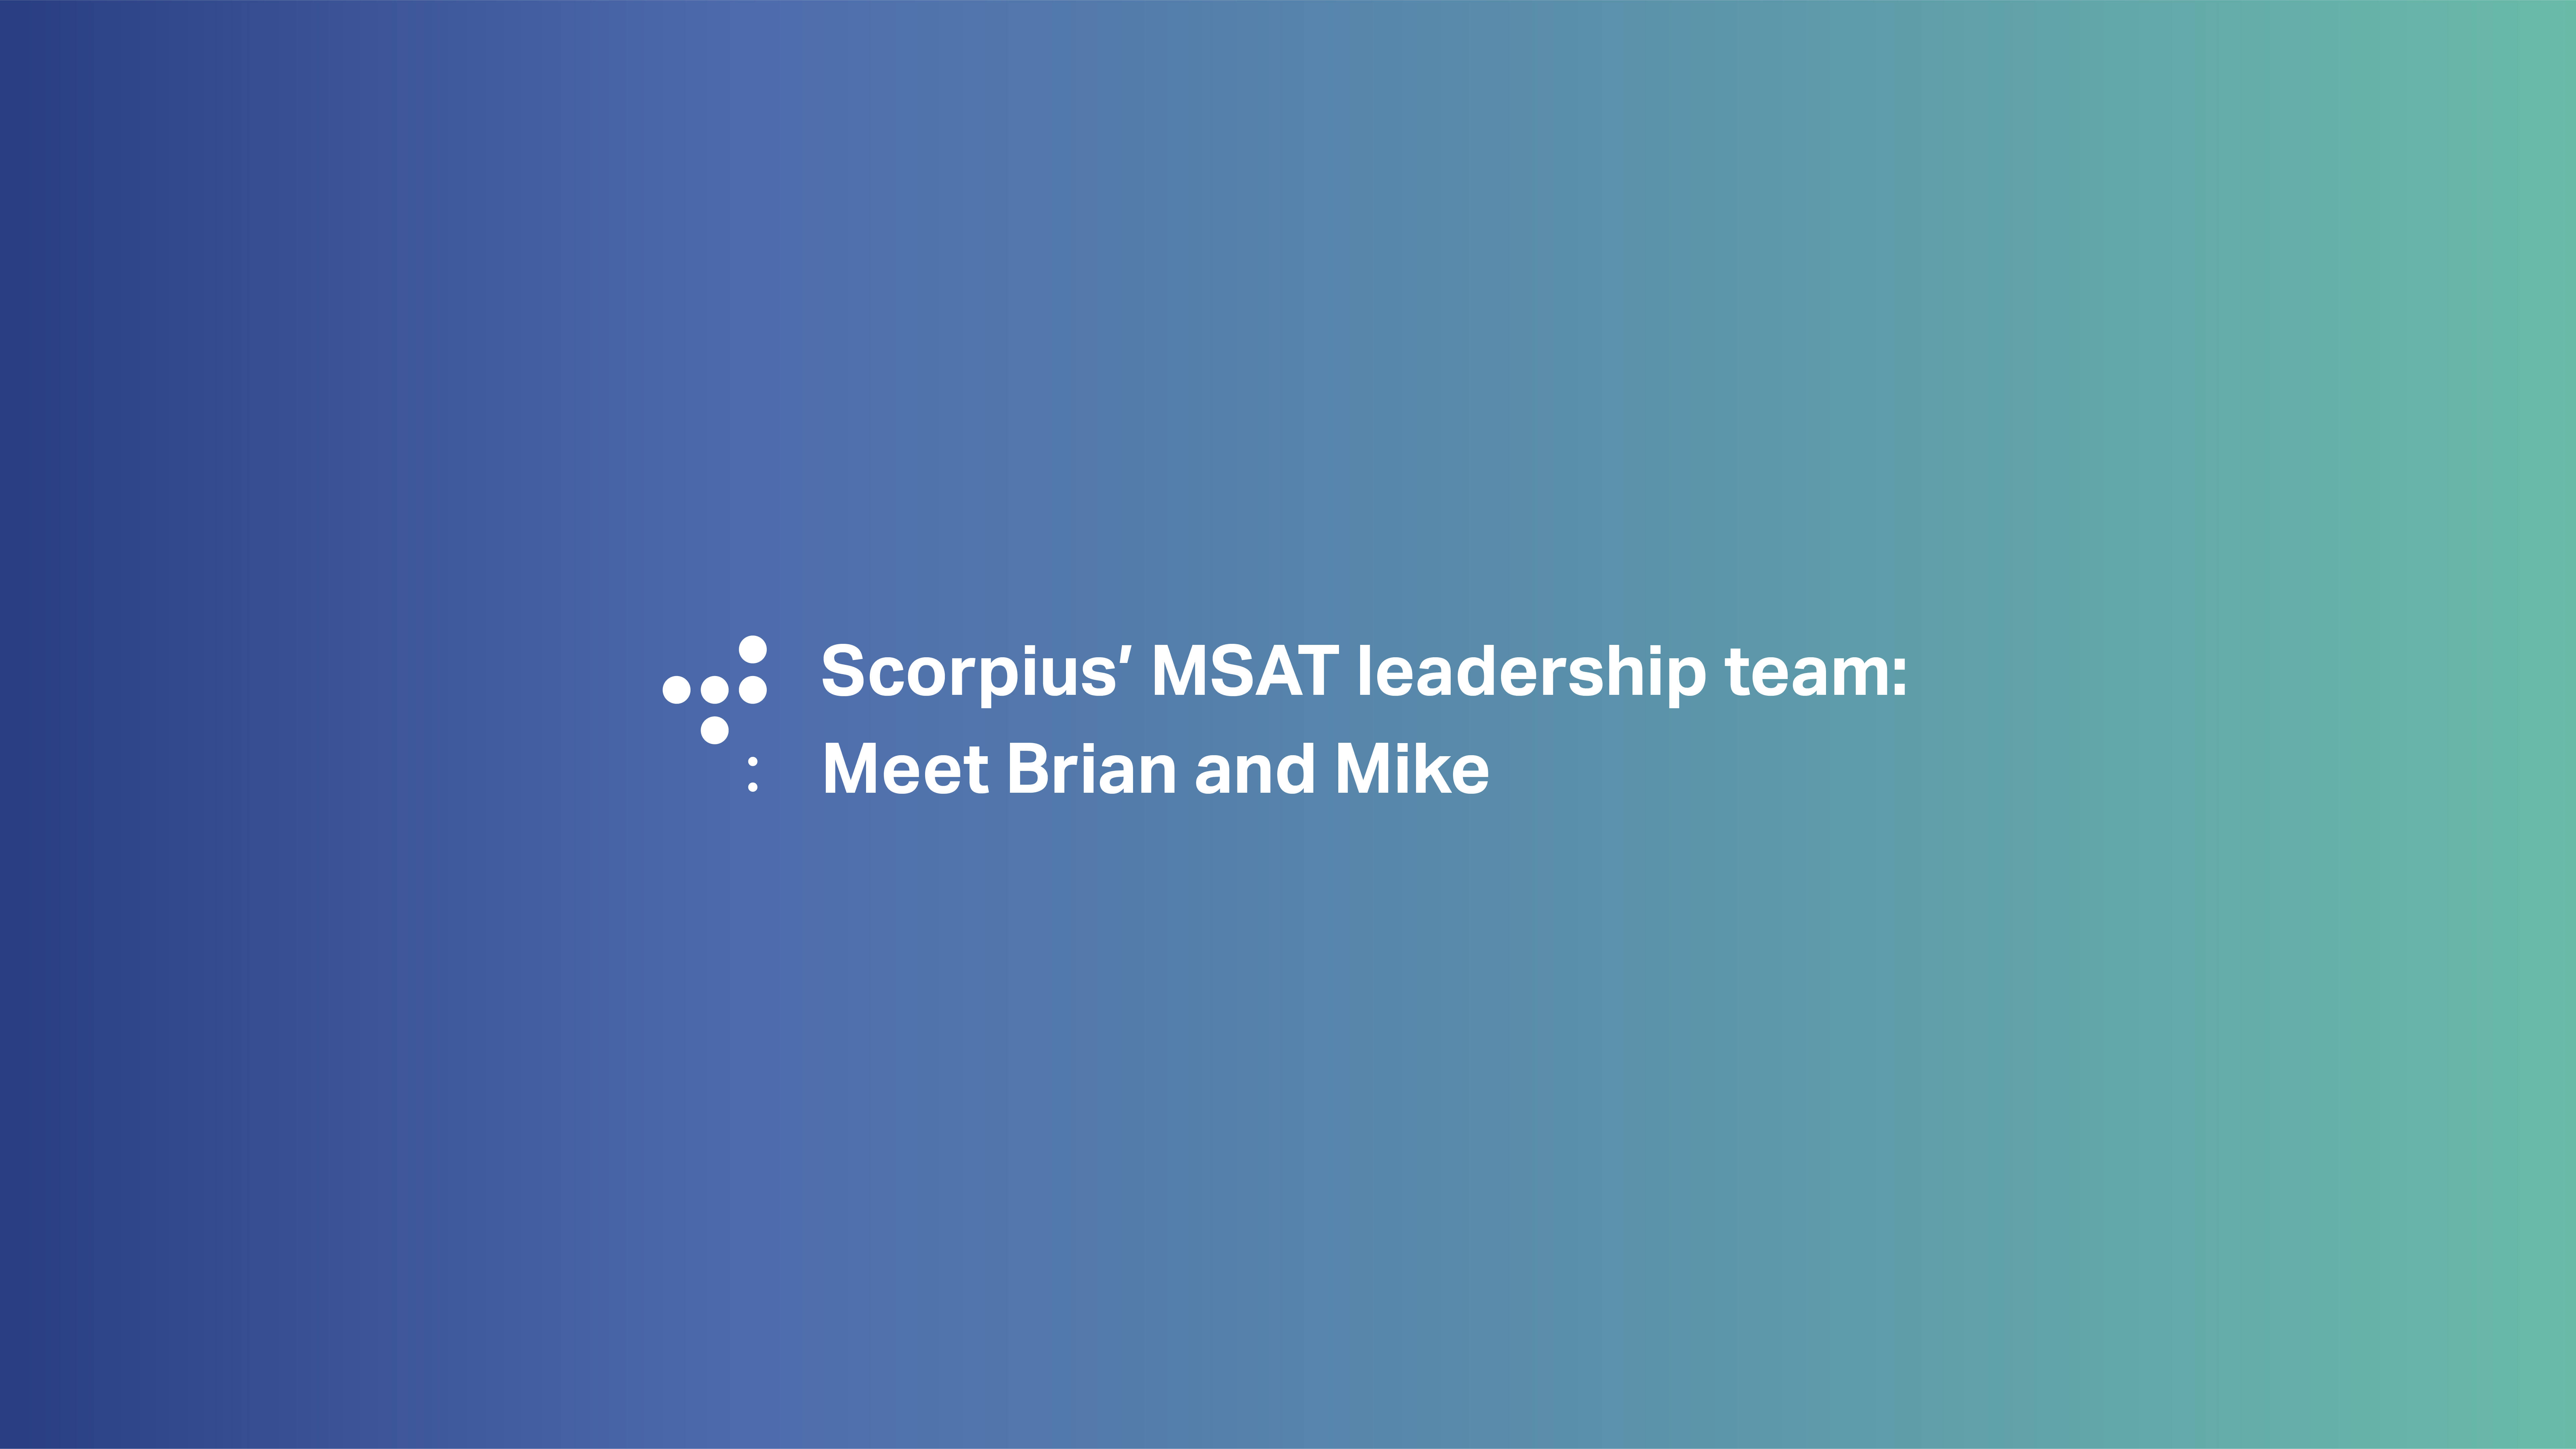 Scorpius' MSAT leadership team: Meet Brian and Mike